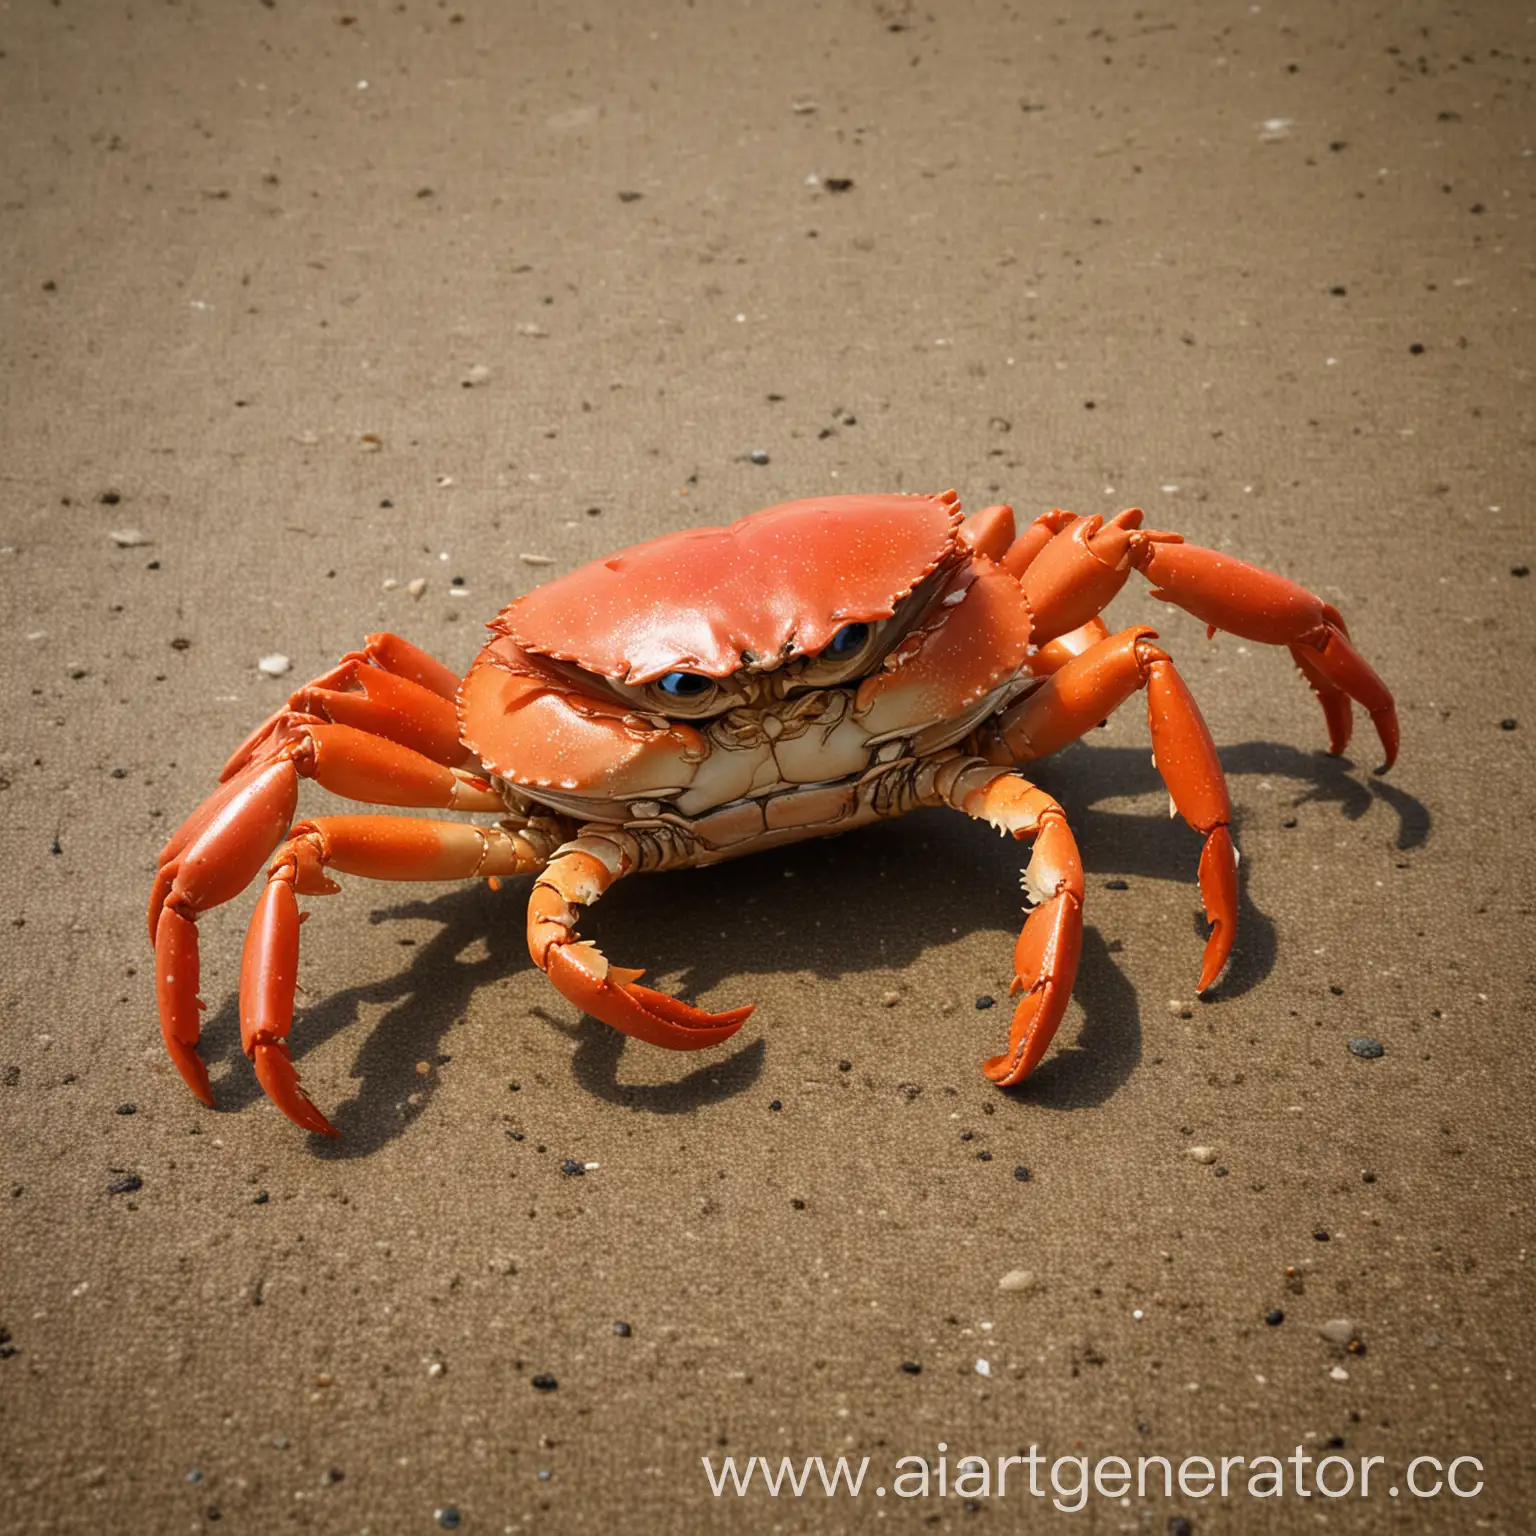 Cheerful-Crab-Enjoying-a-Sunny-Day-by-the-Seashore